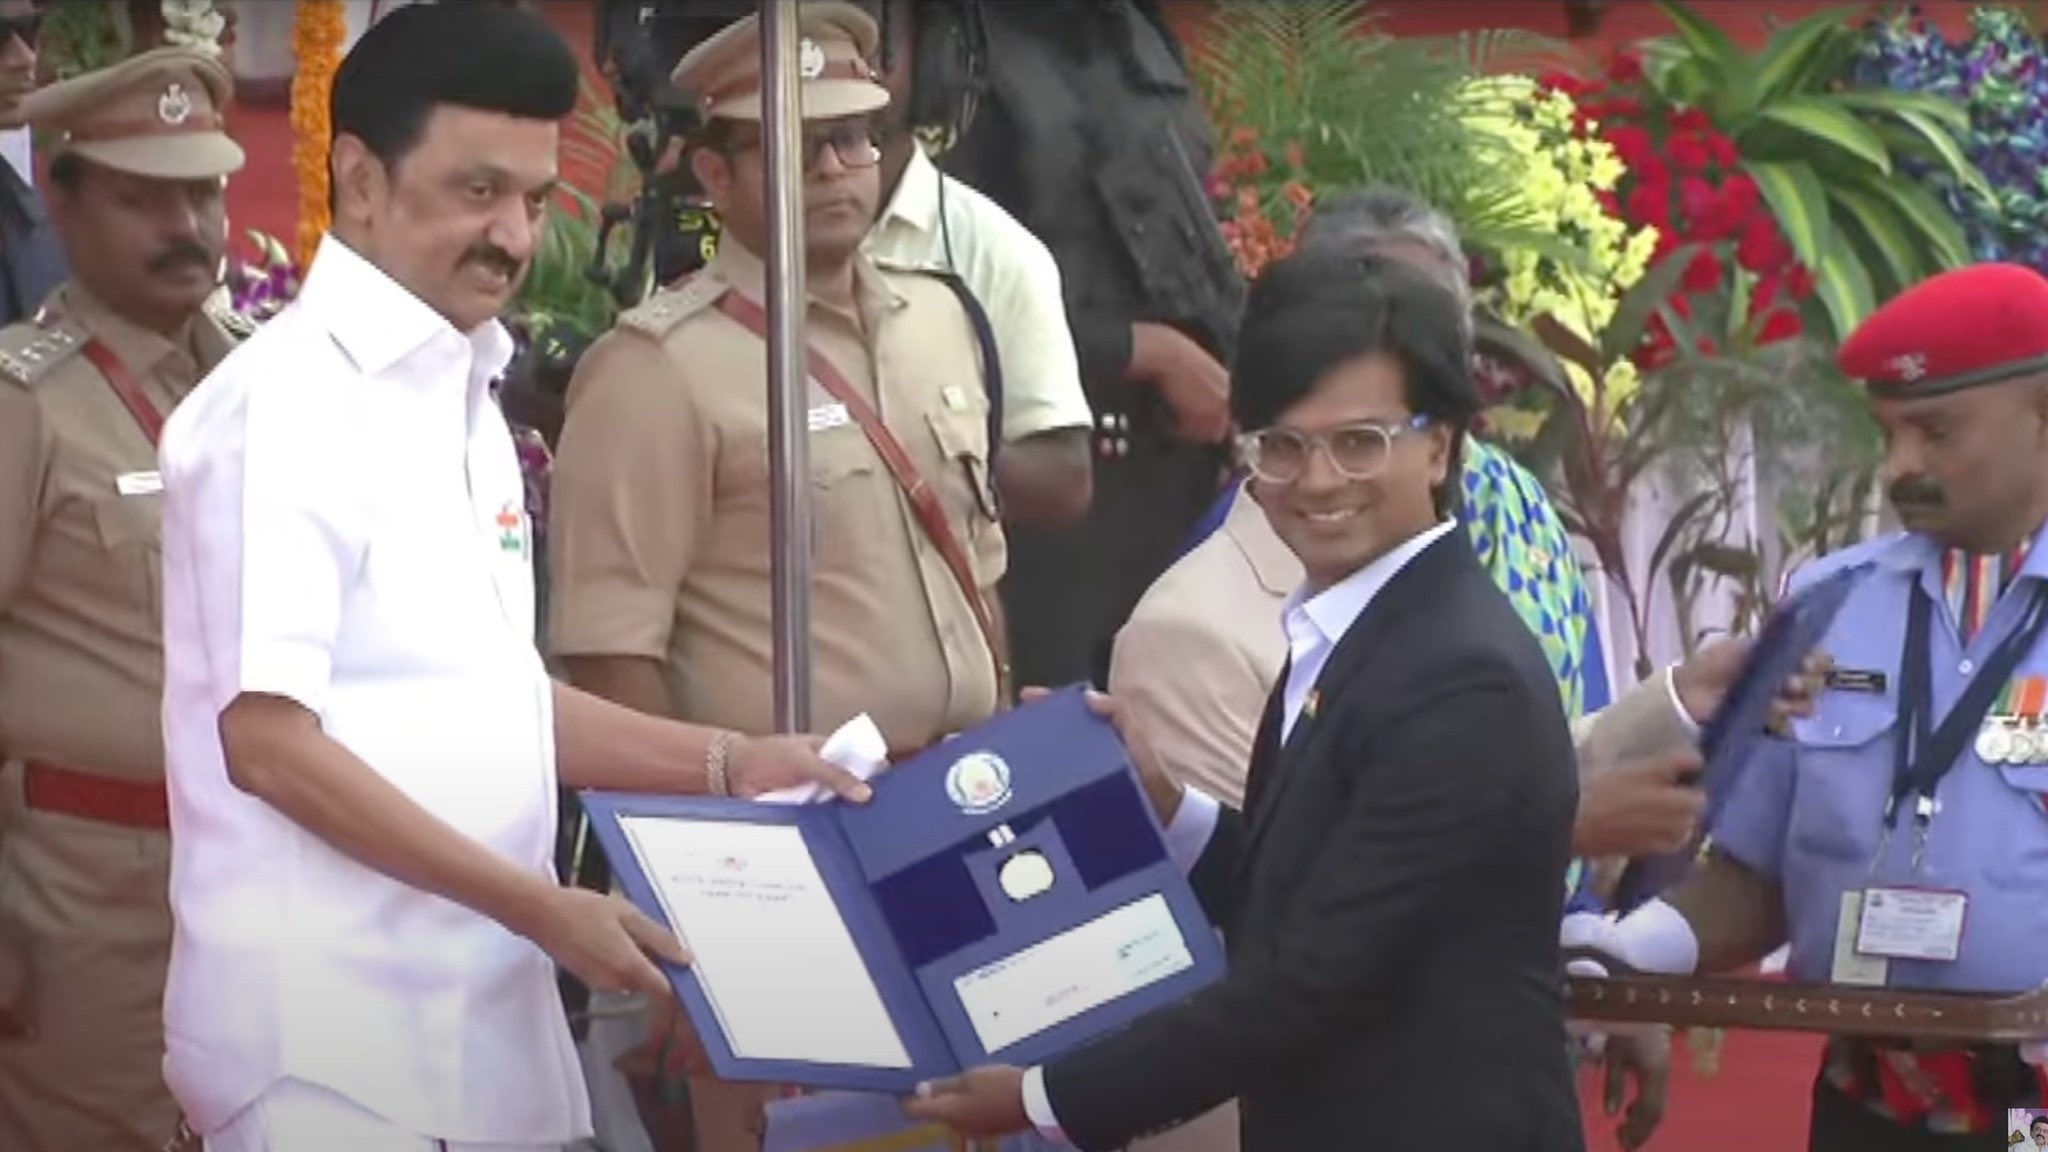 Mohammed Zubair Kottai Ameer Communal Harmony Award by the Tamil Nadu government